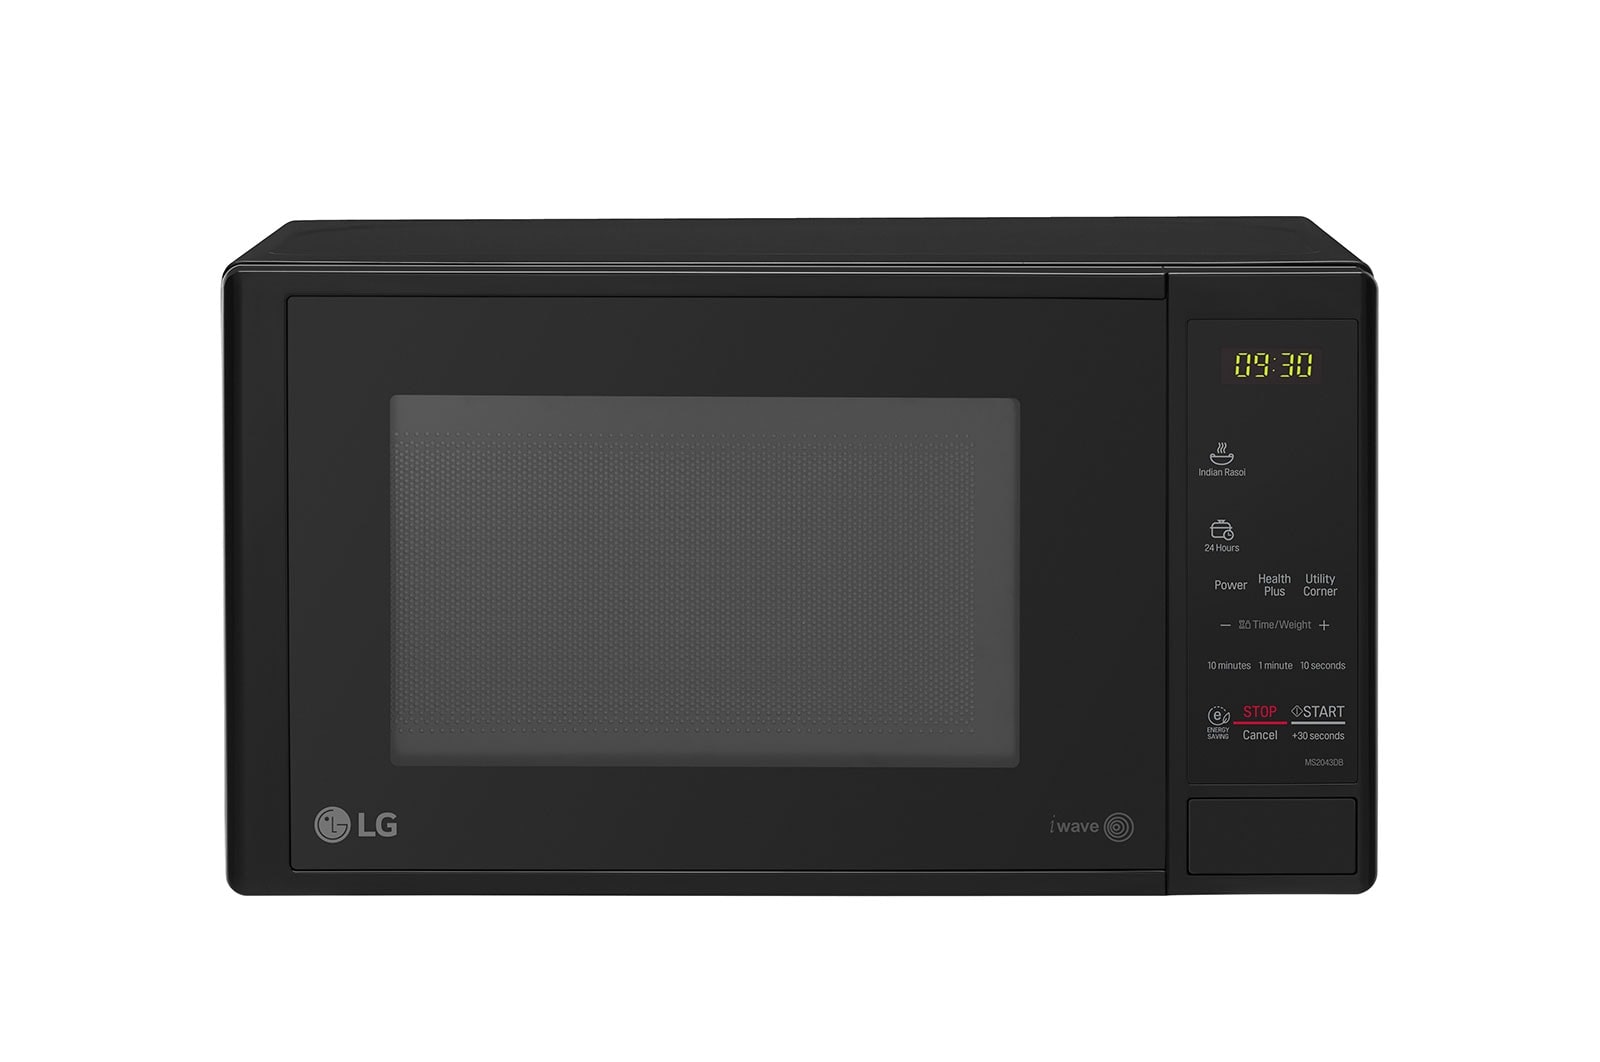 LG Microwave Solo dengan i-wave technology pemanasan dan defrosting merata kapasitas 20 Liter - Hitam, MS2042DB